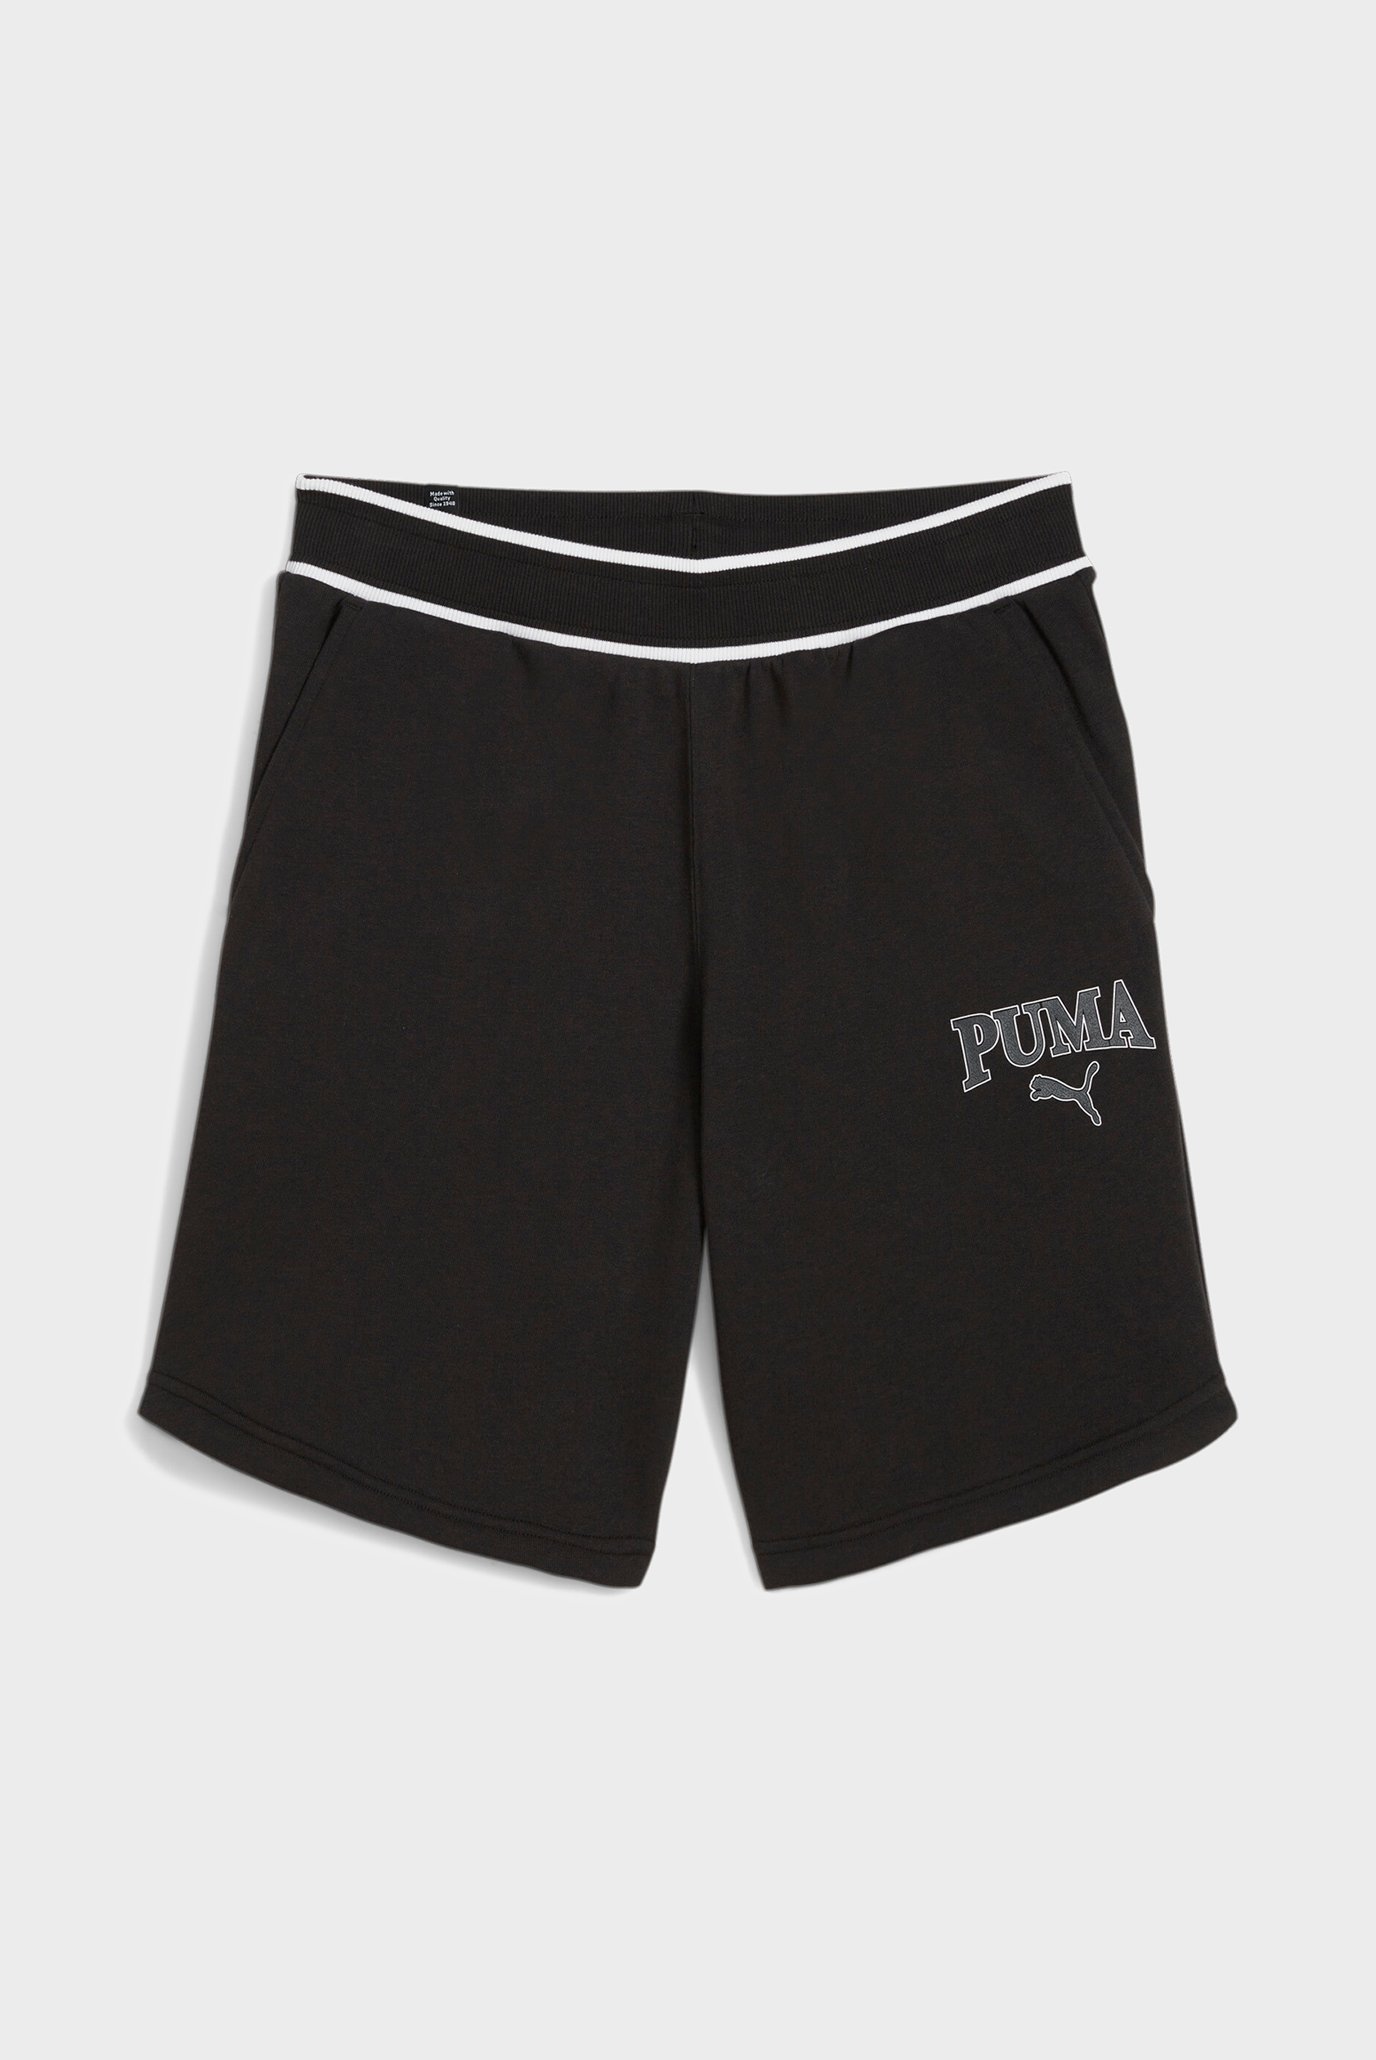 Чоловічі чорні шорти PUMA SQUAD Shorts 1